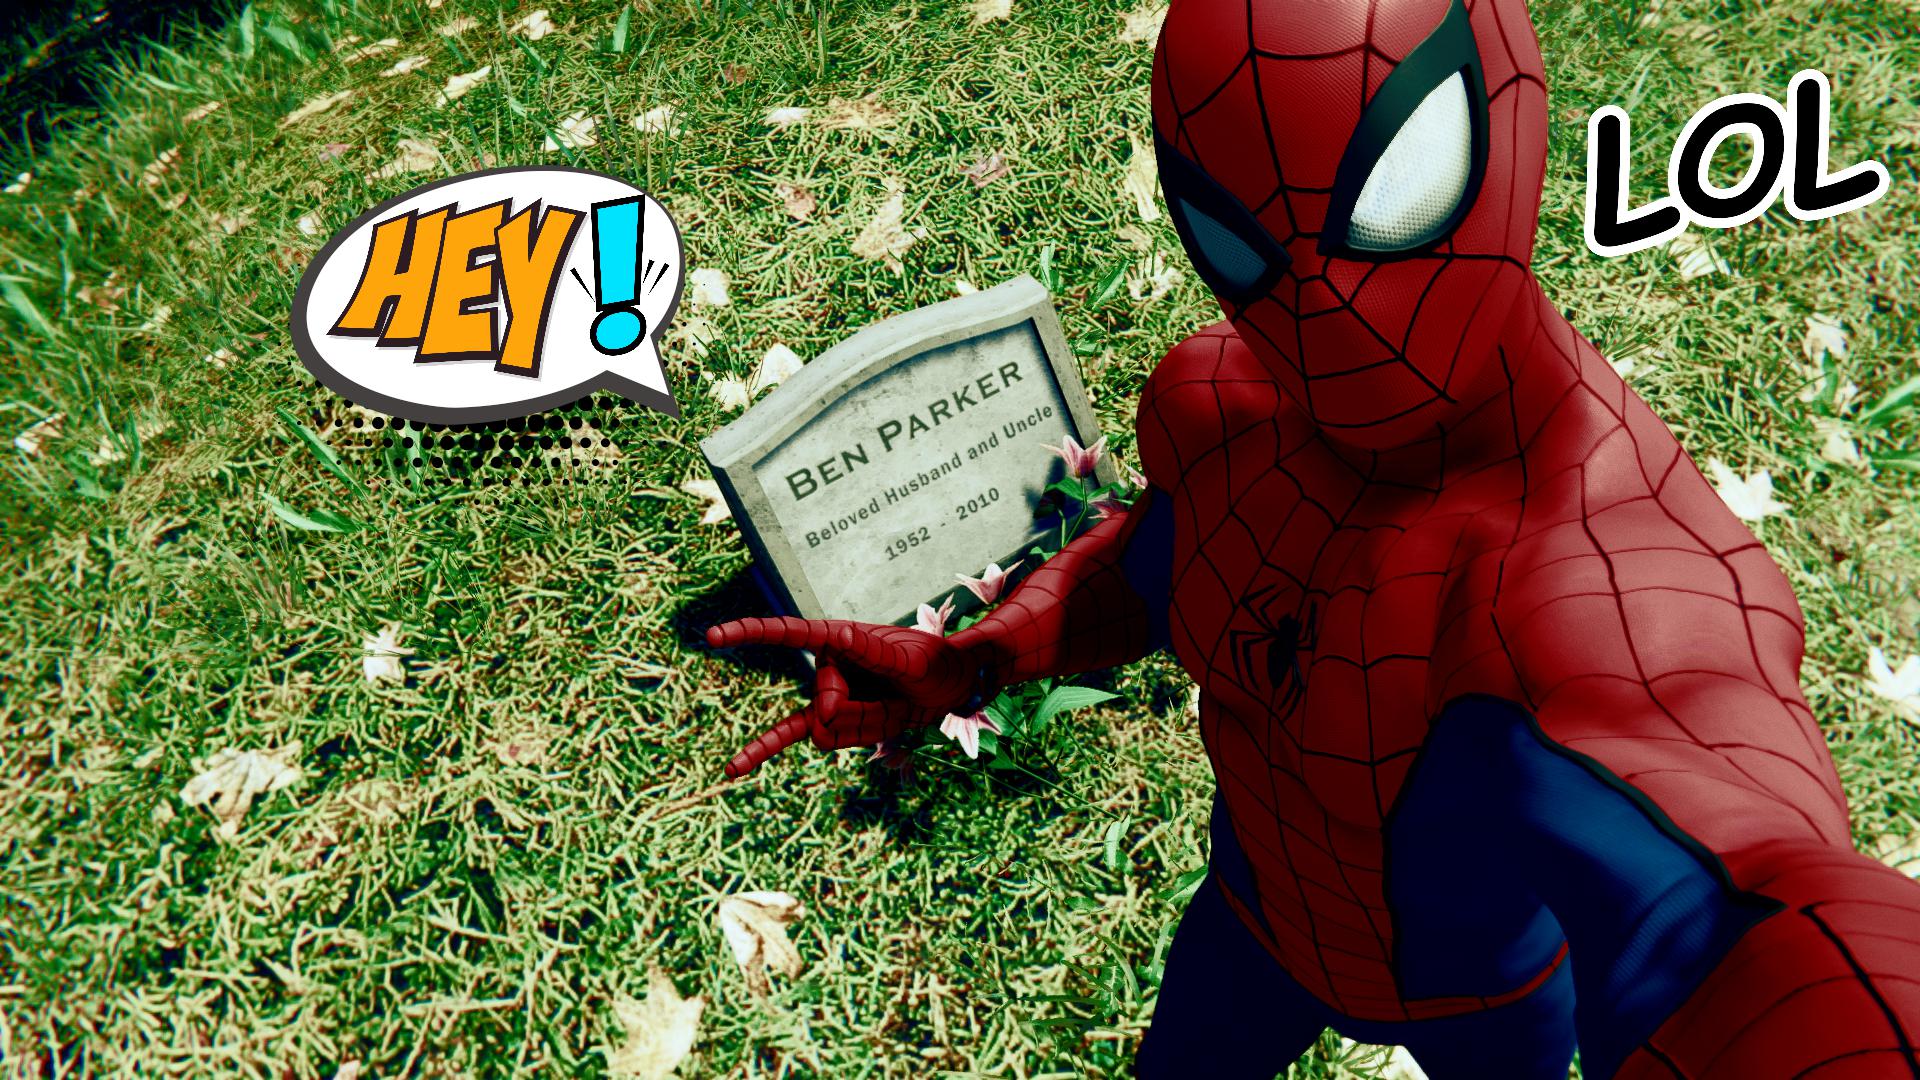 CG1989 Twitter: "Hi Uncle Ben #SpiderManPS4 #PS4share #PS4 #SpiderMan https://t.co/QoIAAPfKpx" /